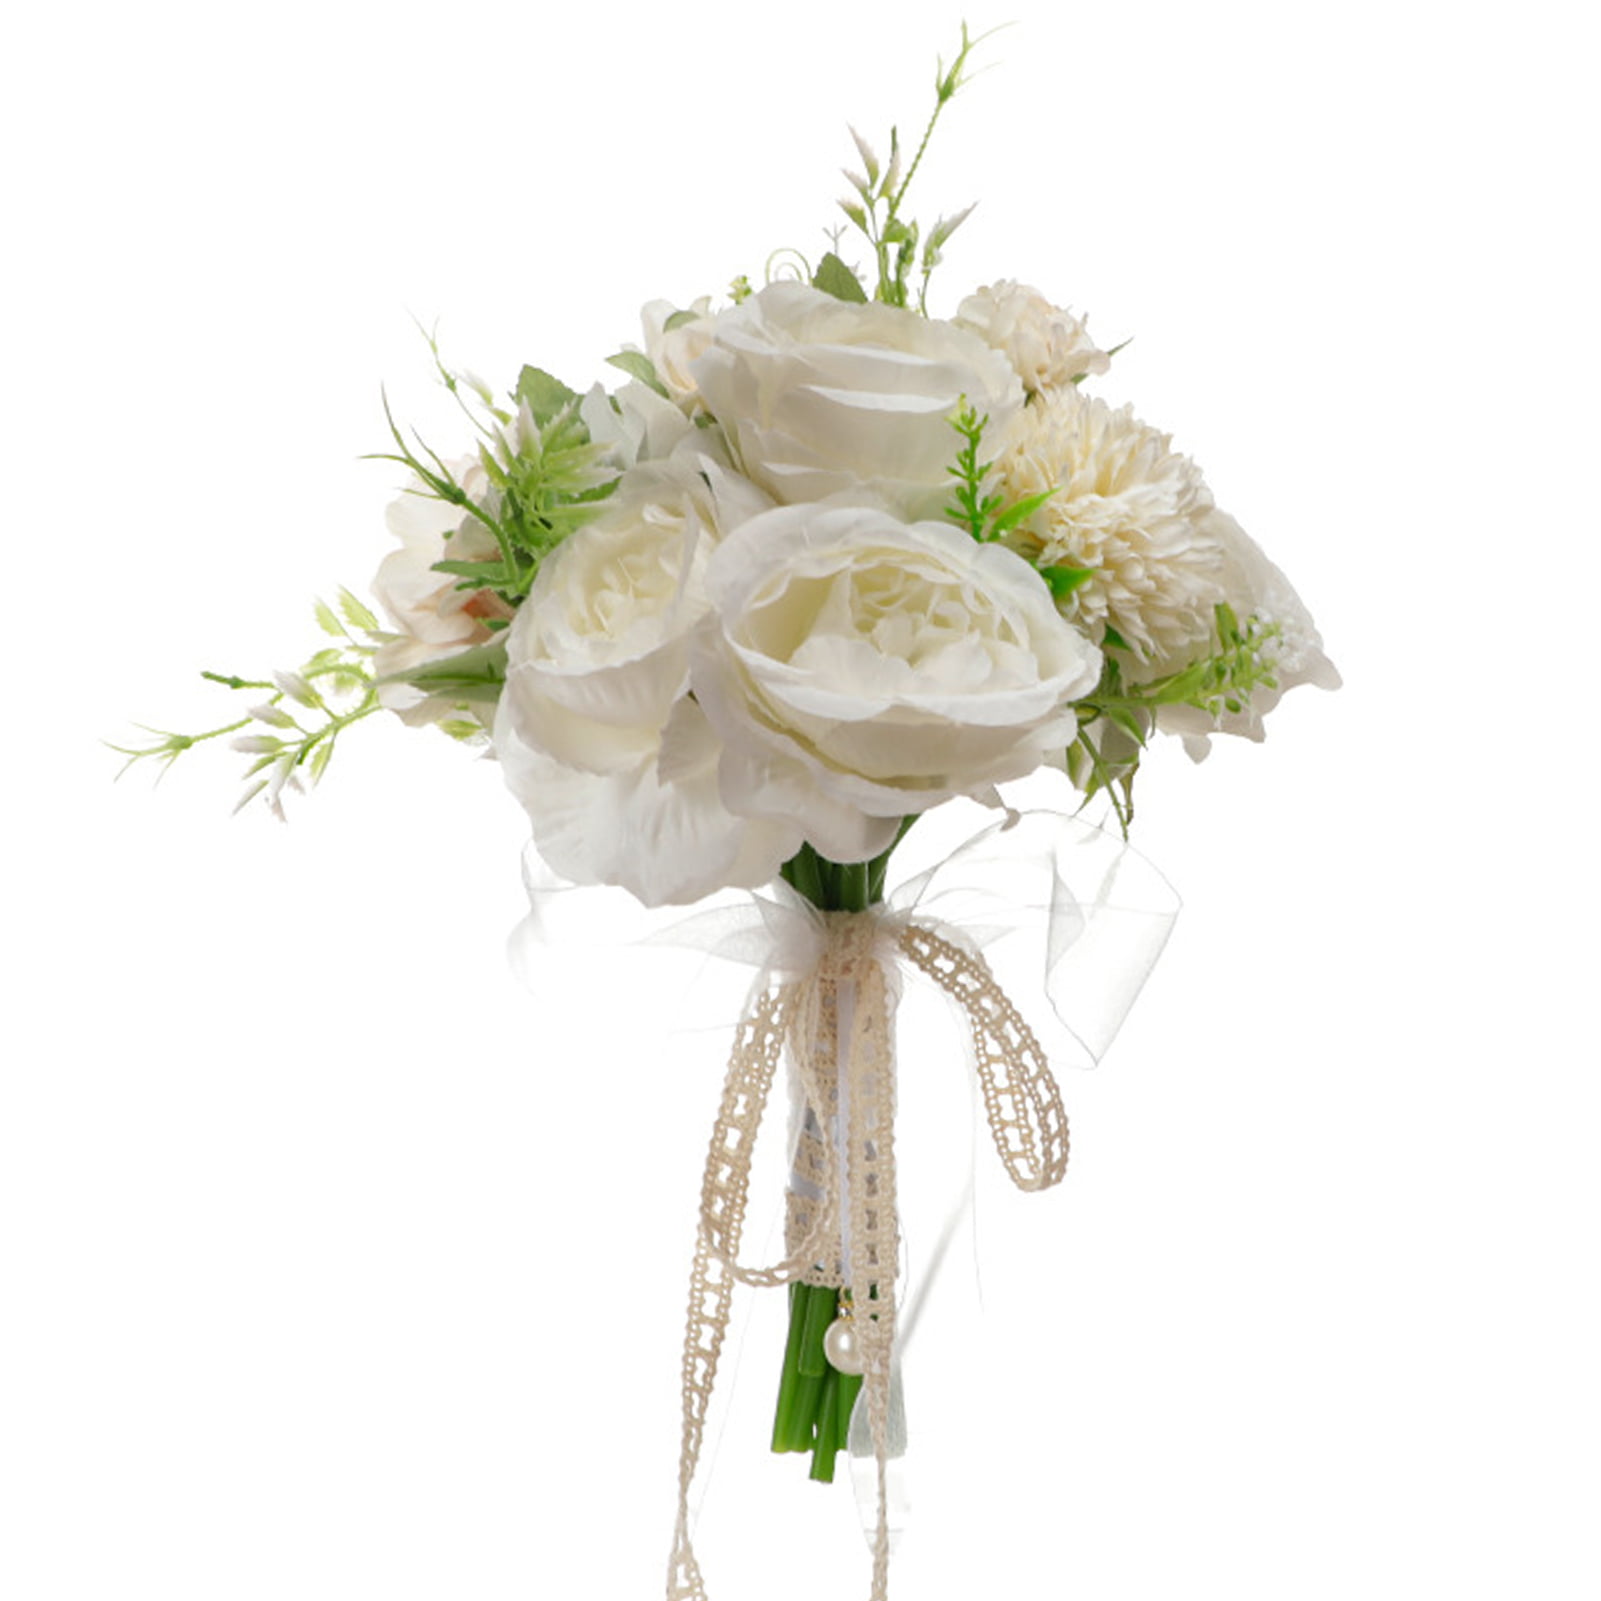 Details about   Mini Artificial Fake  Flowers Corsage Bouquet Boutonniere Wedding Party Supplies 